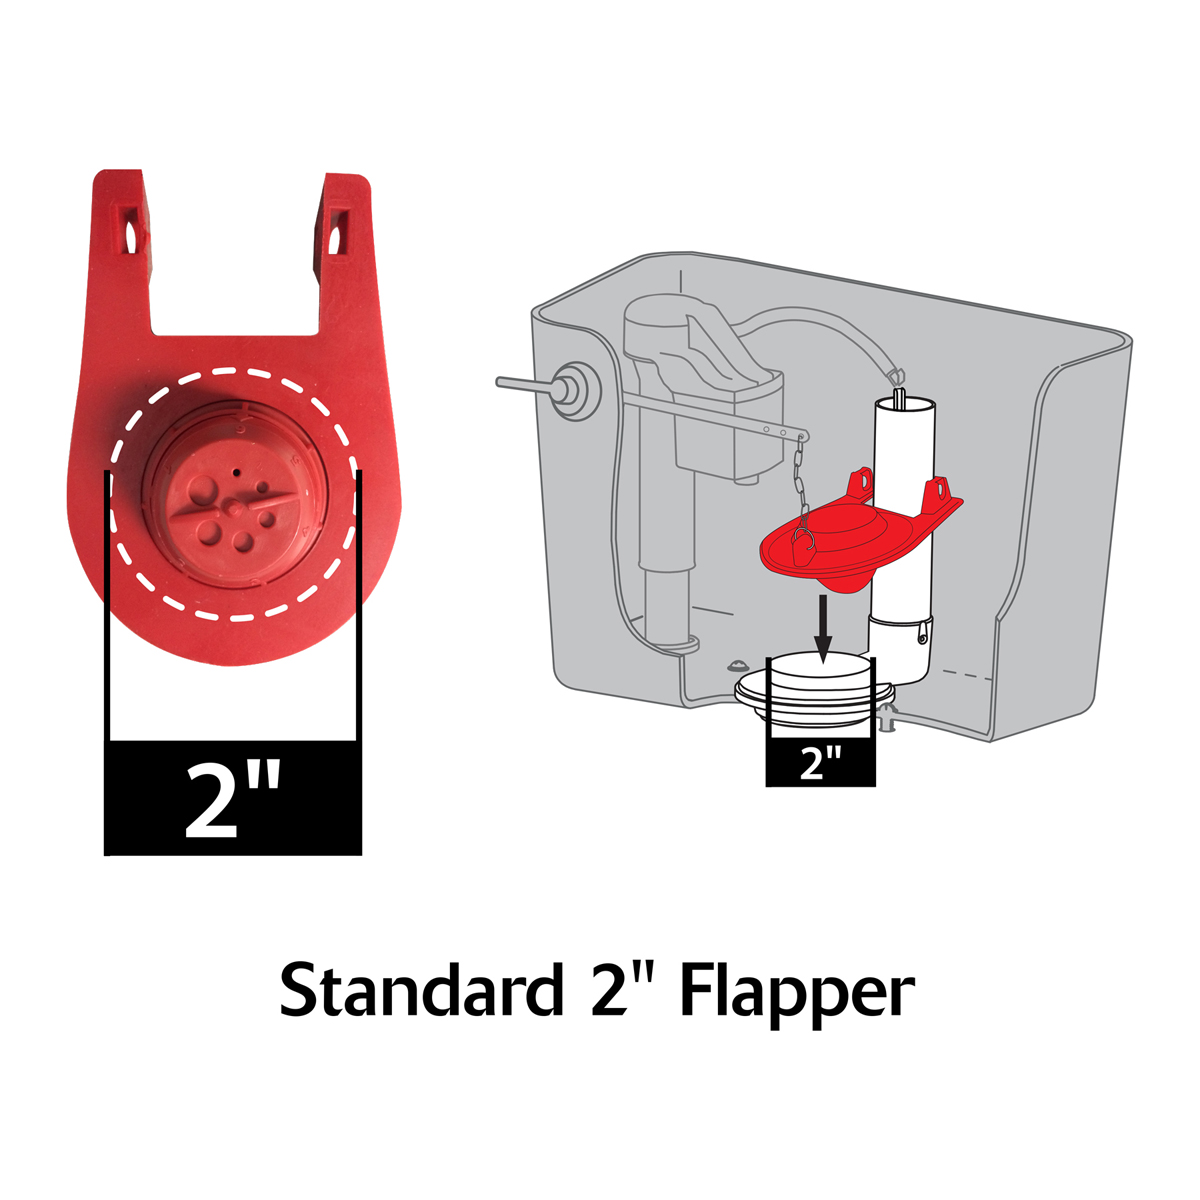 Standard 2 inch flapper dimensions